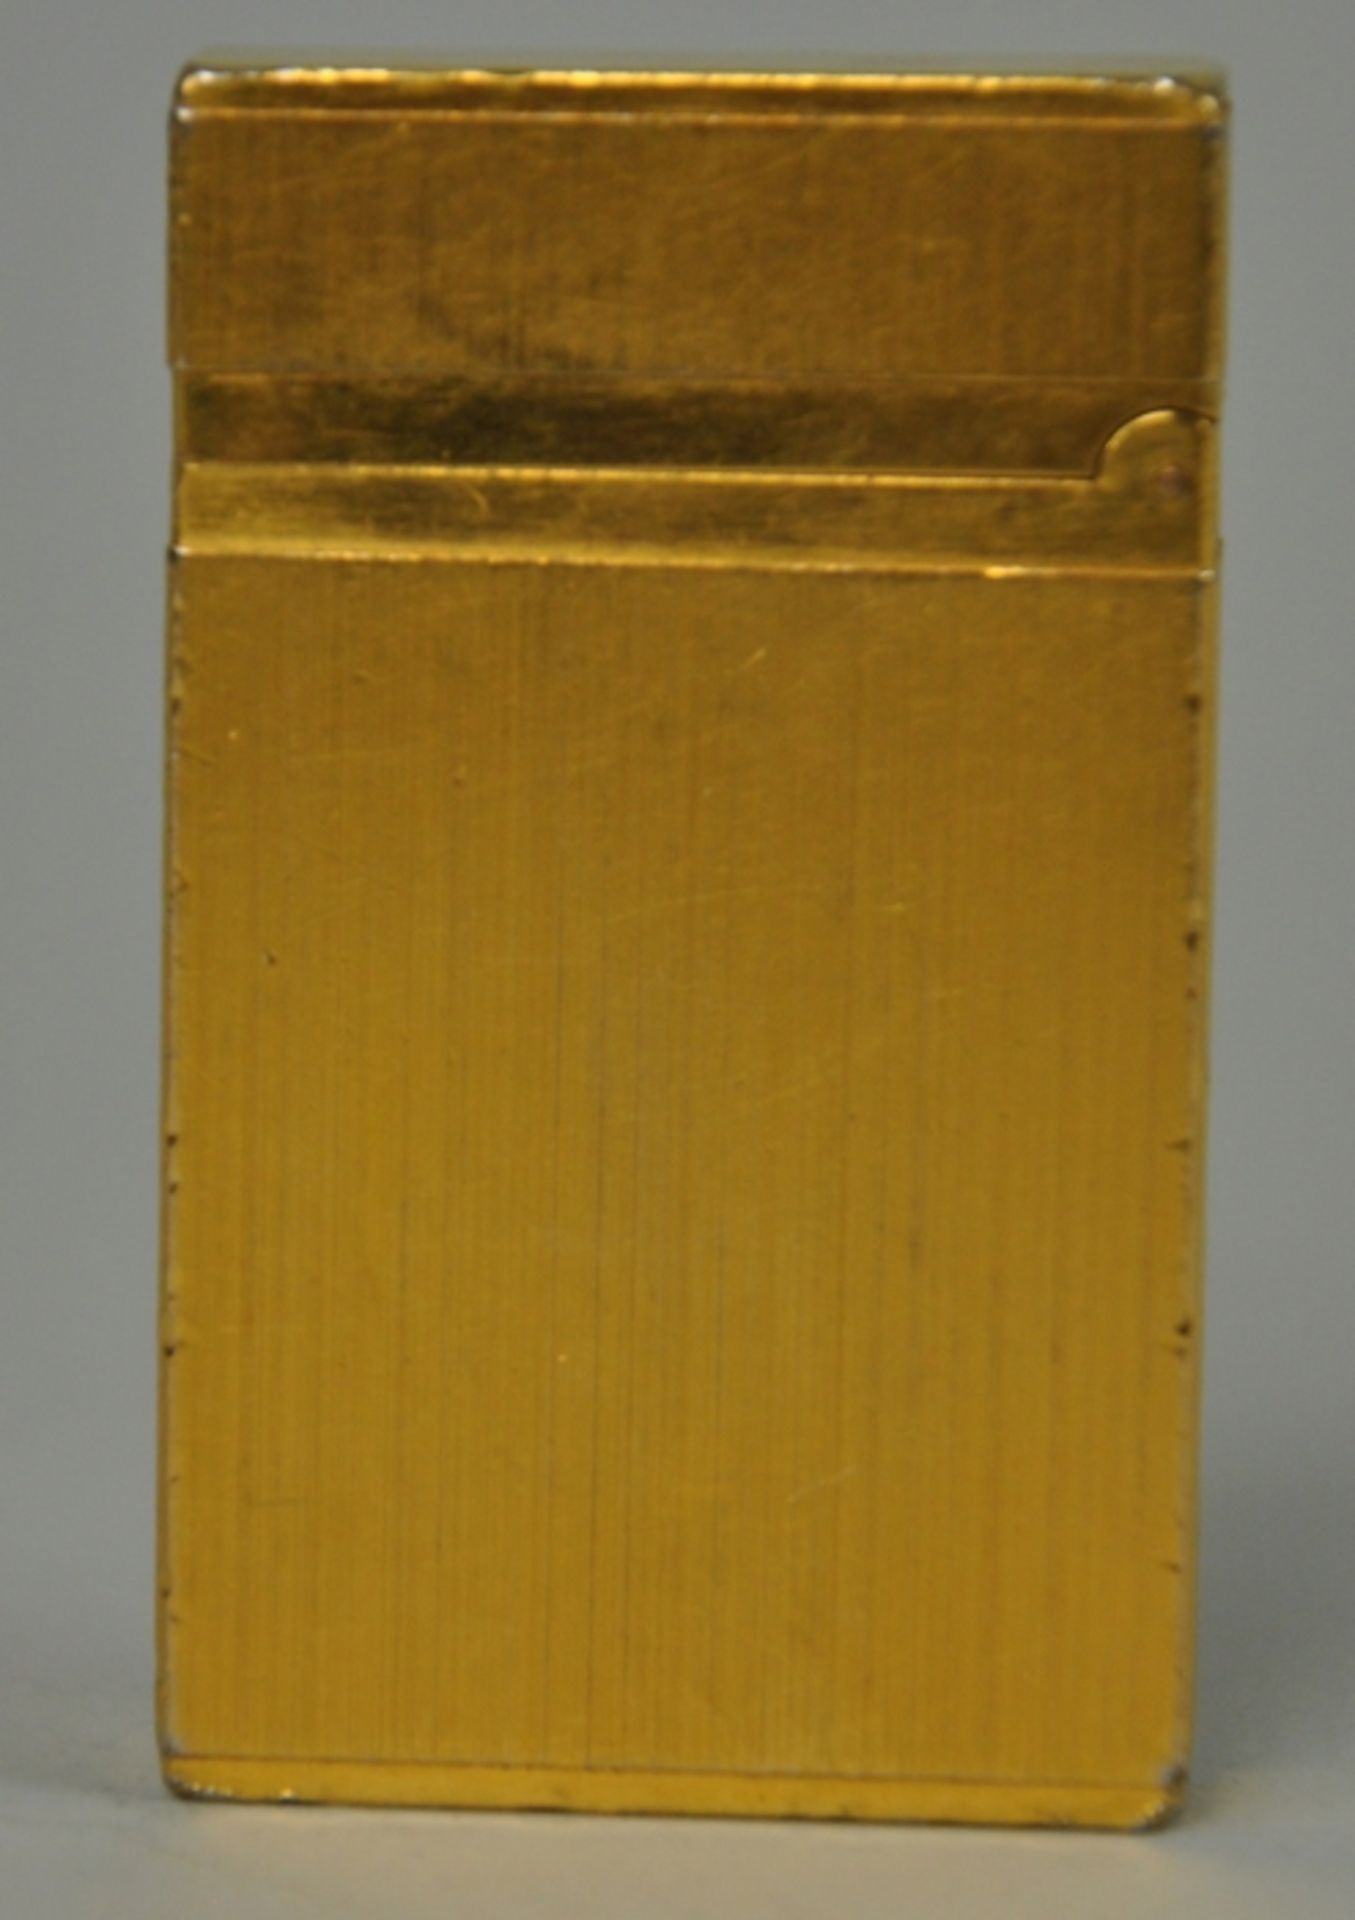 FEUERZUG Dupont, rechteckiges, vergoldetes Gehäuse, intakt - Bild 2 aus 2